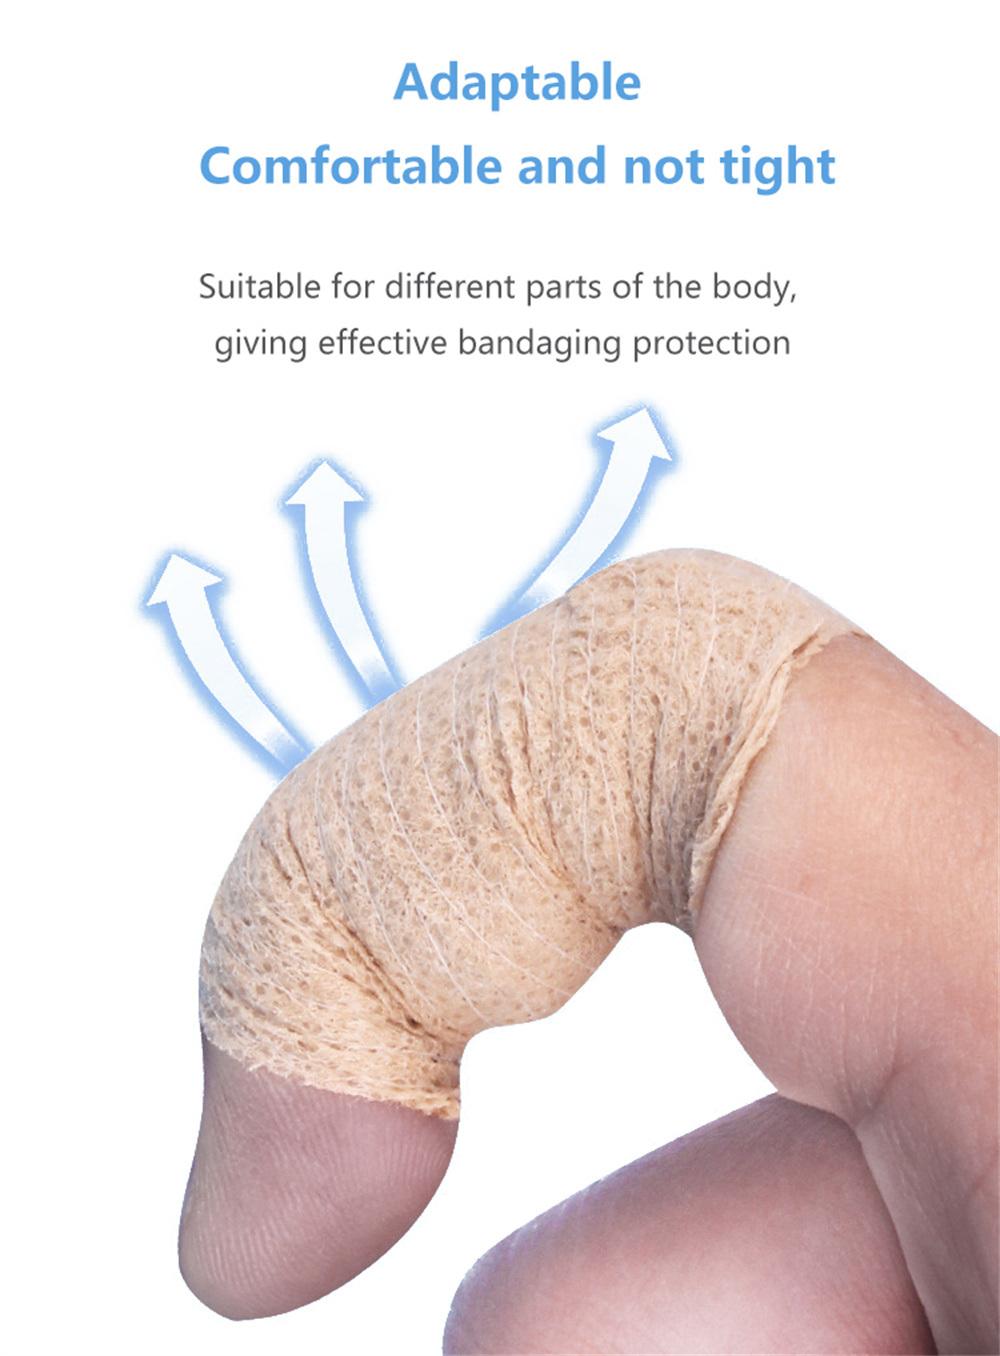 Adherent Cohesive Bandage Waterproof Skin Color Adhesive Sports Bandage